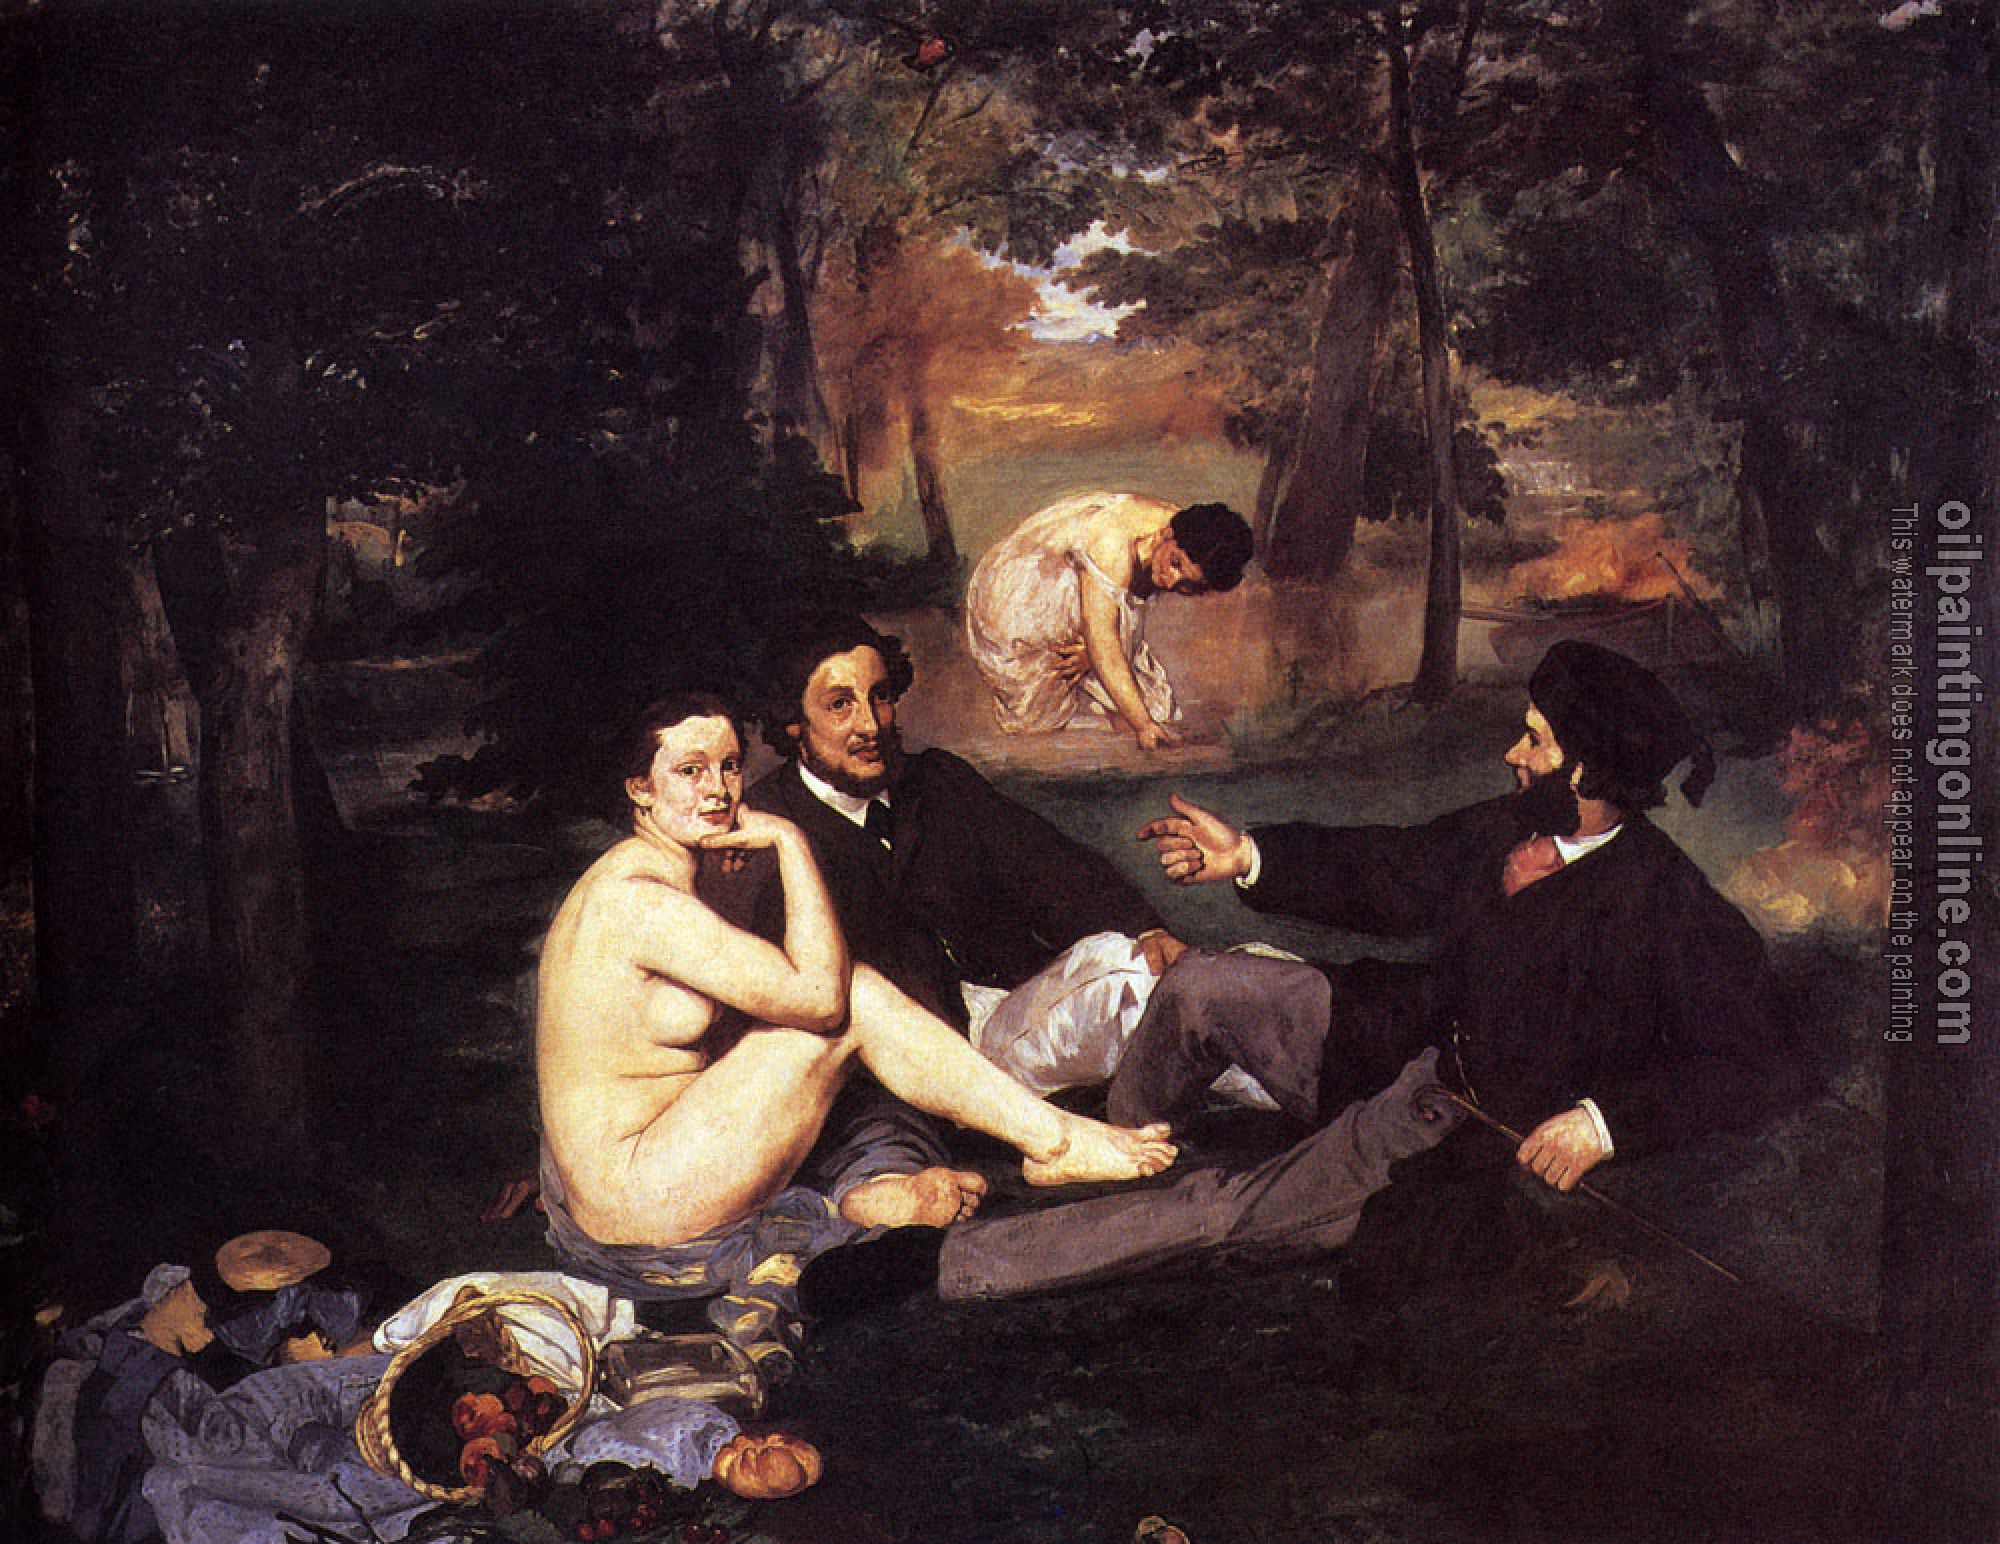 Manet, Edouard - Dejeuner Sur L'Herbe